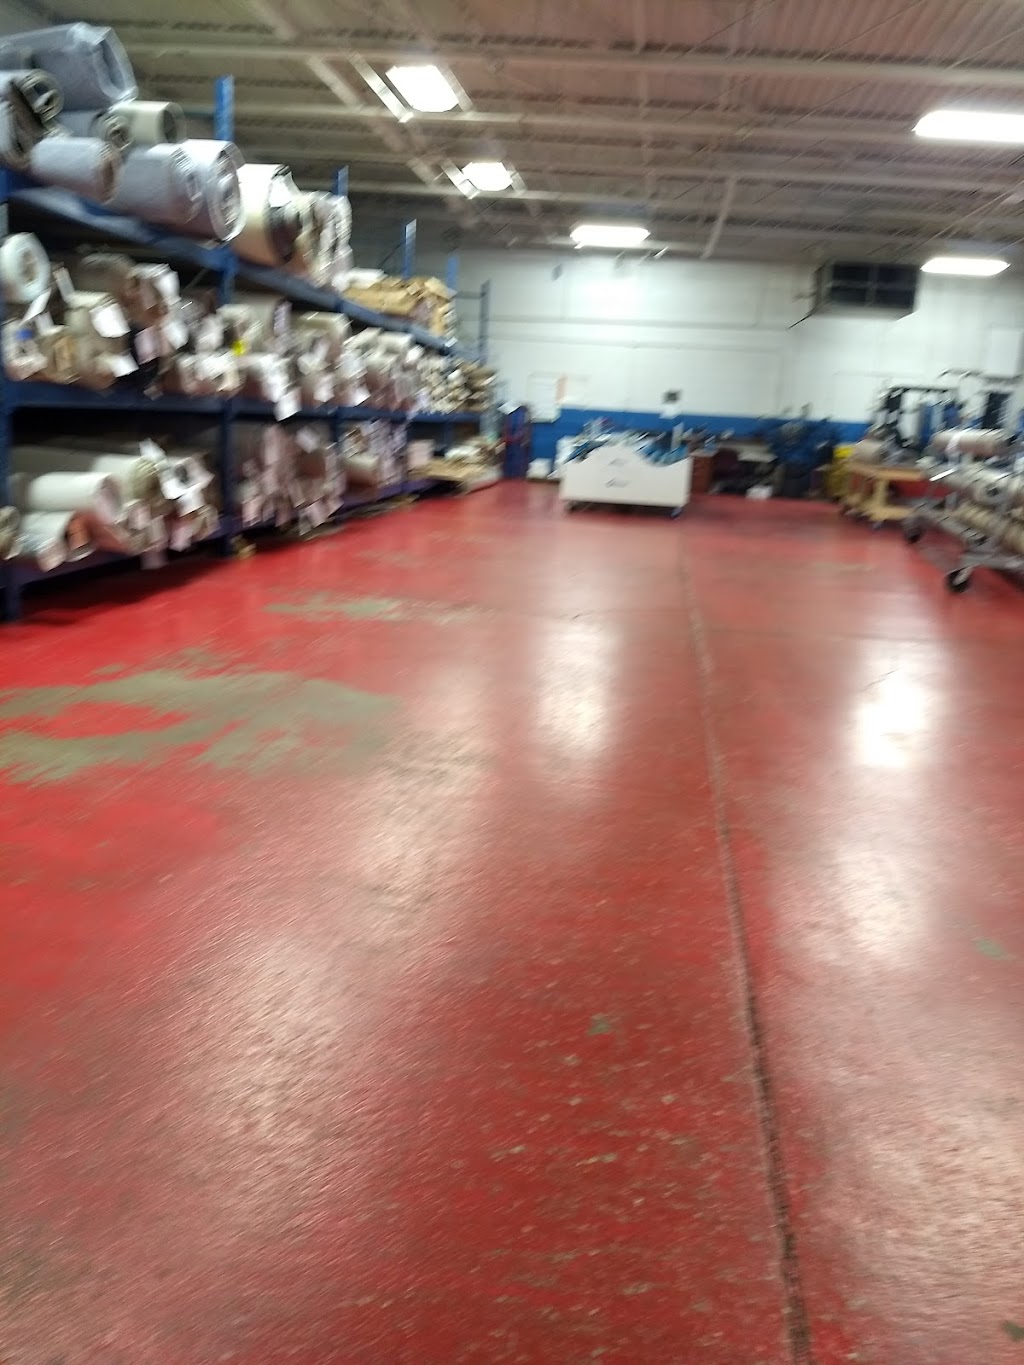 Motor City Carpet & Flooring | 23957 Ryan Rd, Warren, MI 48091 | Phone: (586) 755-2022